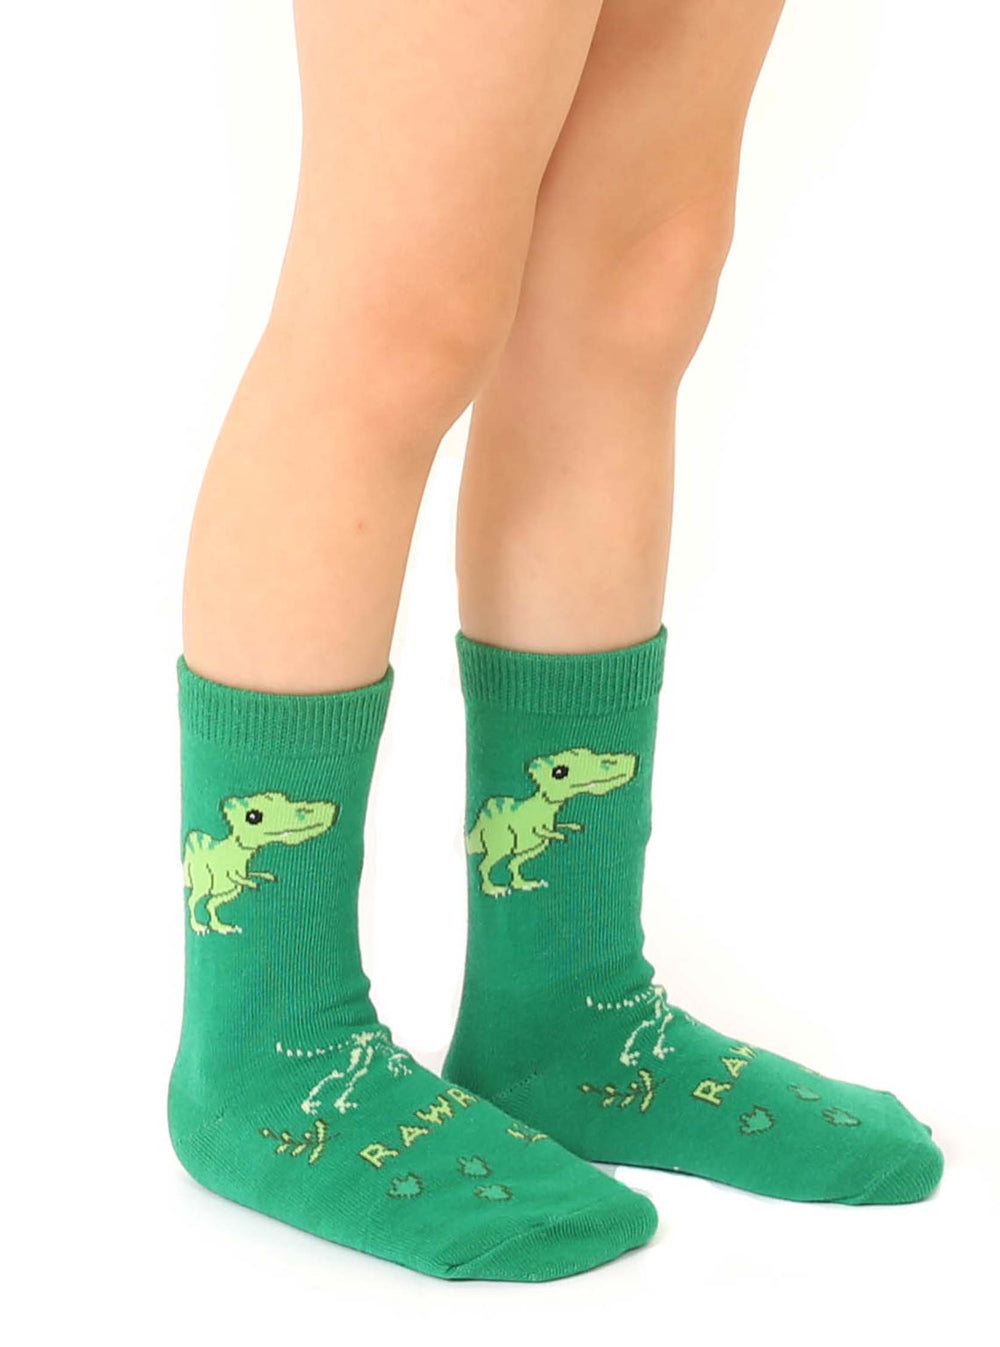 Kids Dino 3D Socks - Premium Socks from Living Royal - Just $9.99! Shop now at Pat's Monograms